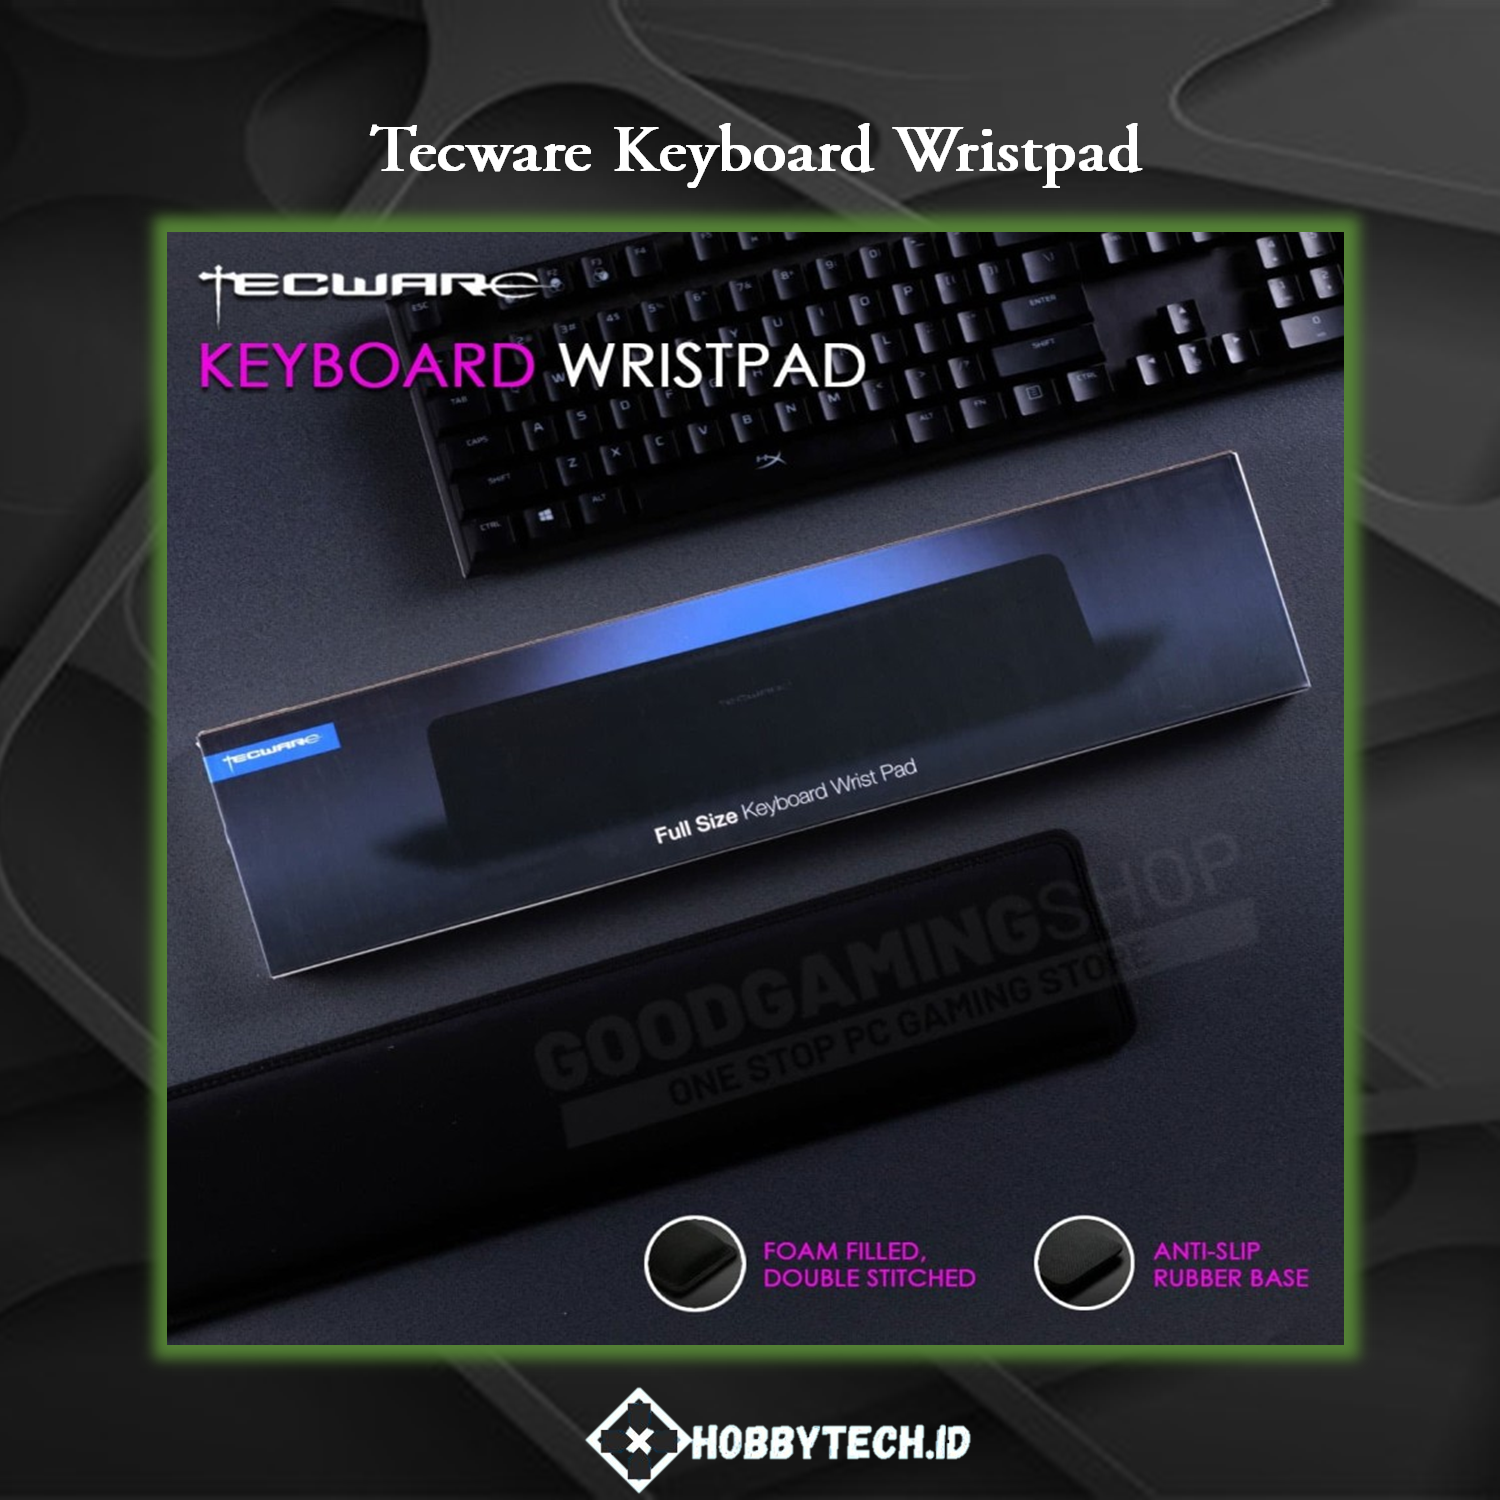 Tecware Keyboard Wristpad